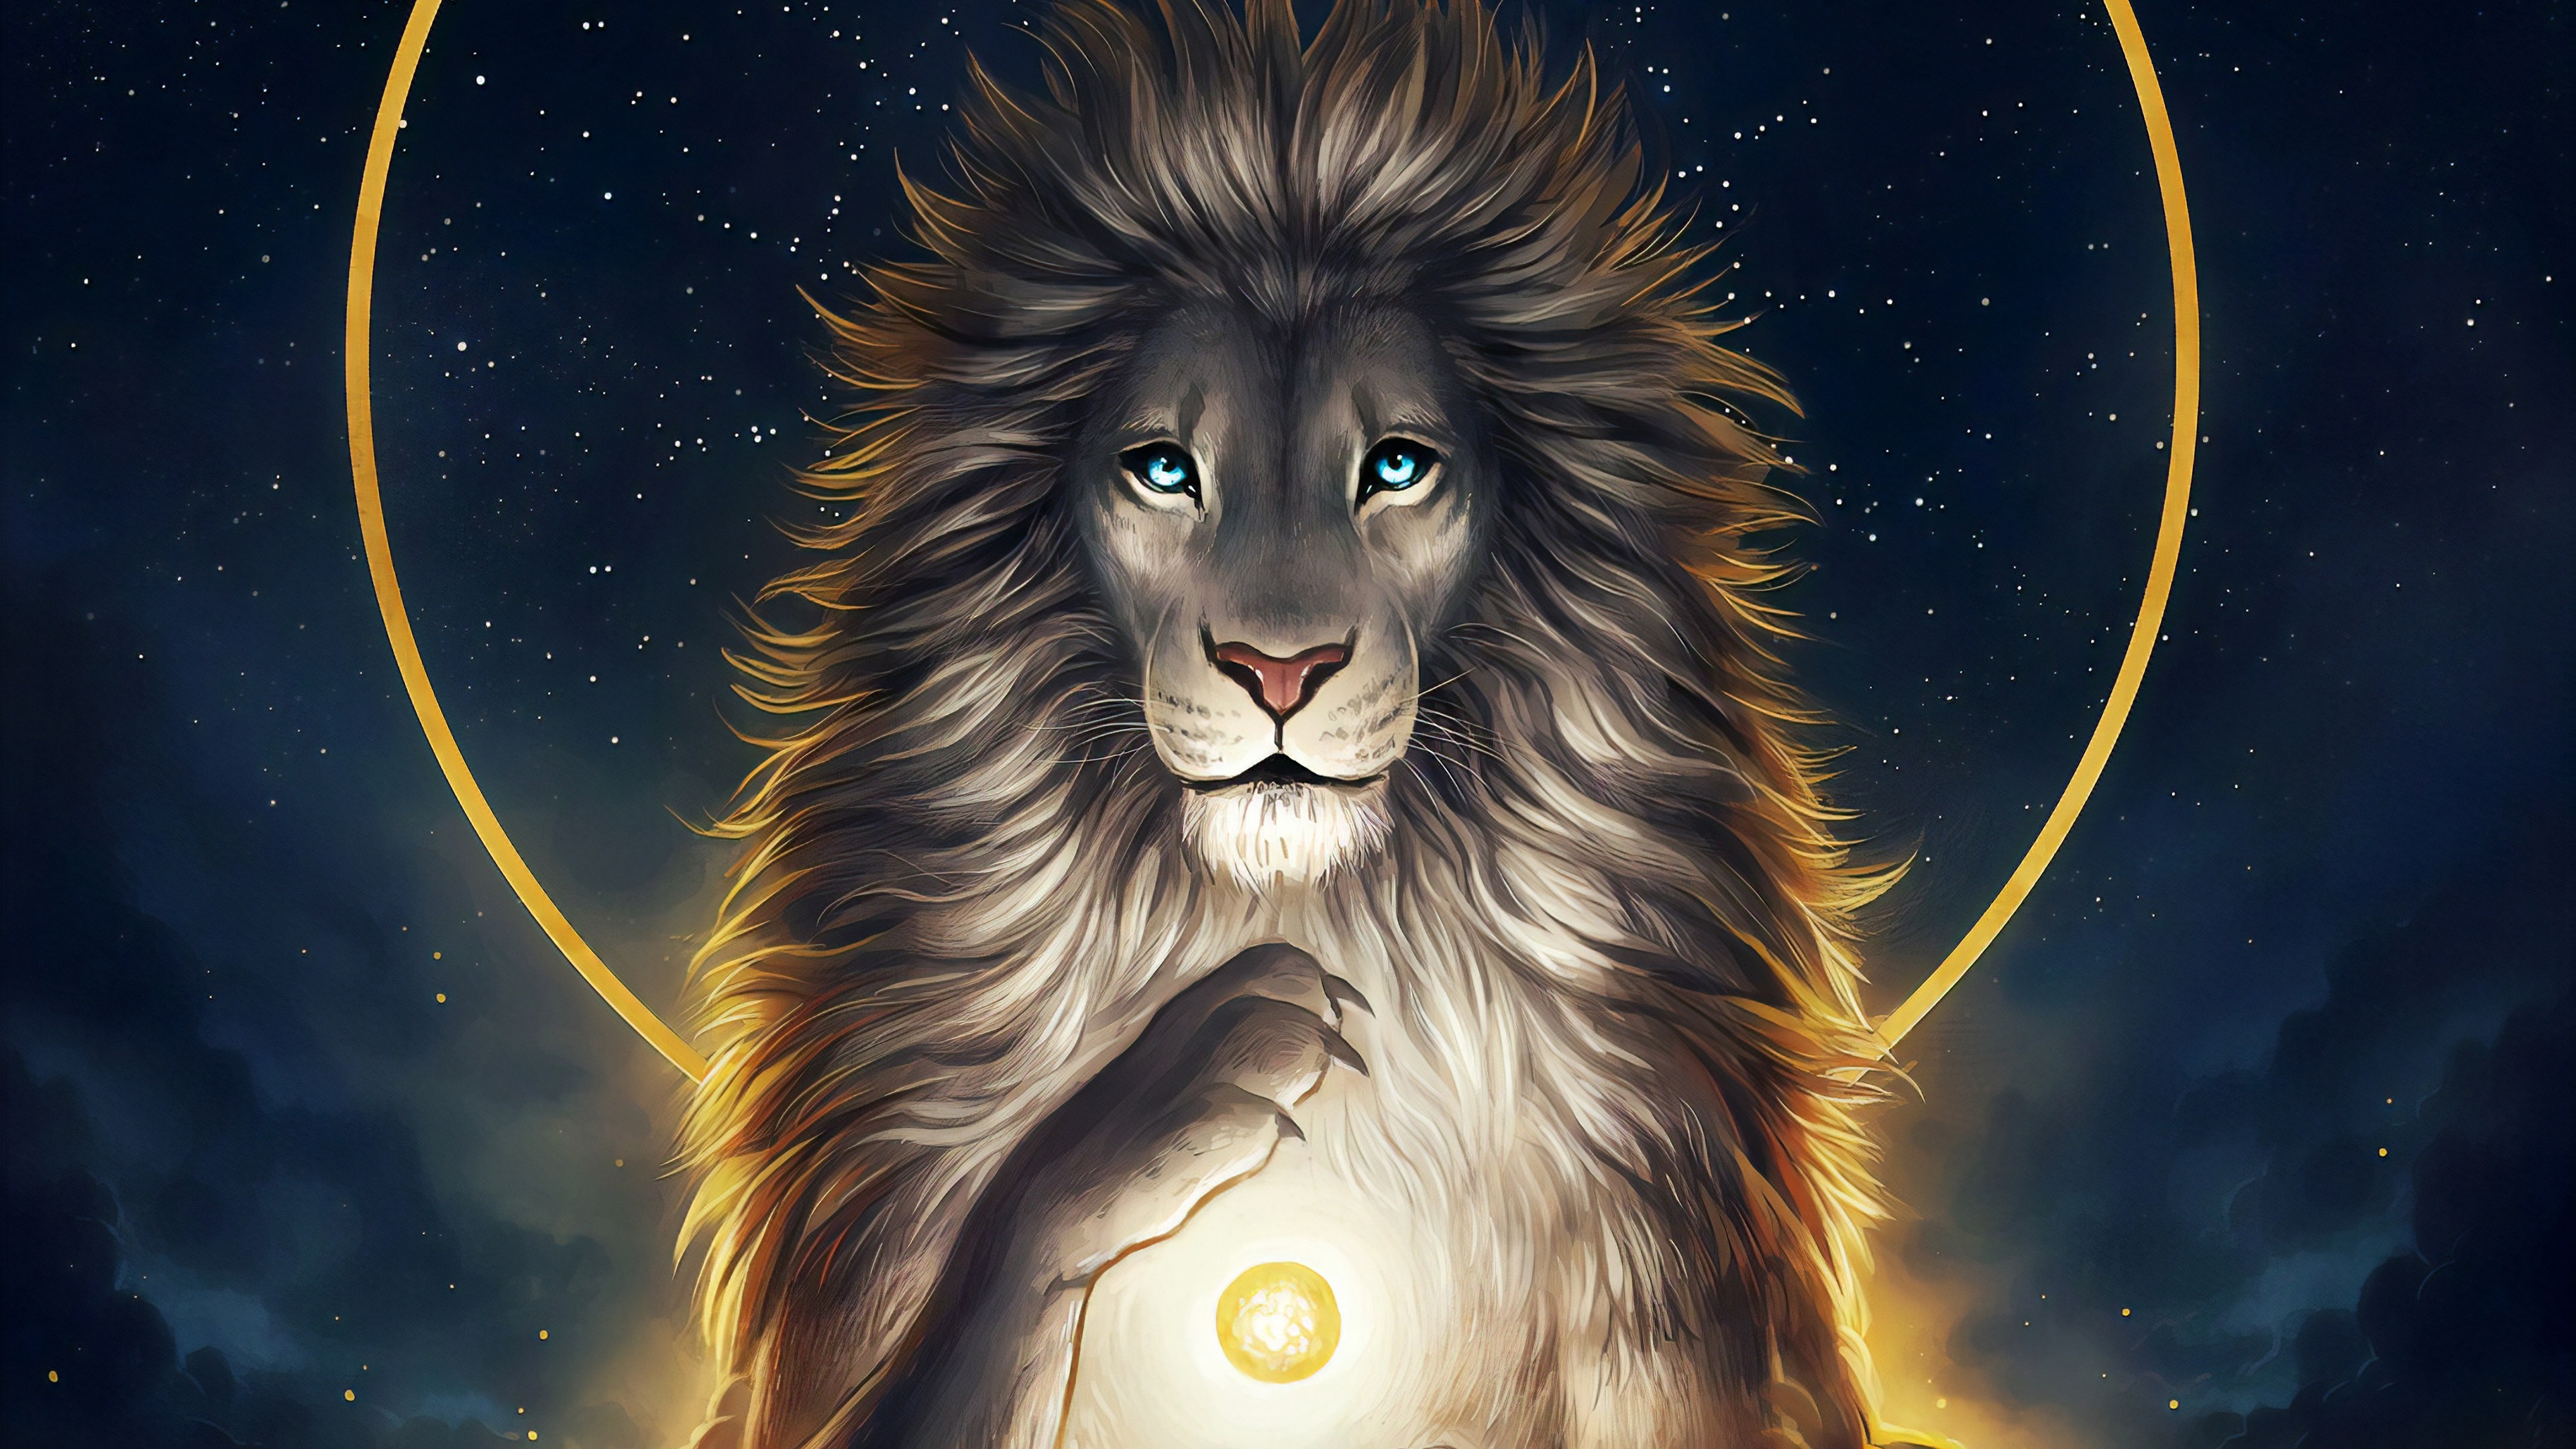 Fantasy Lion 4k Ultra HD Wallpaper by Jonas Jödicke